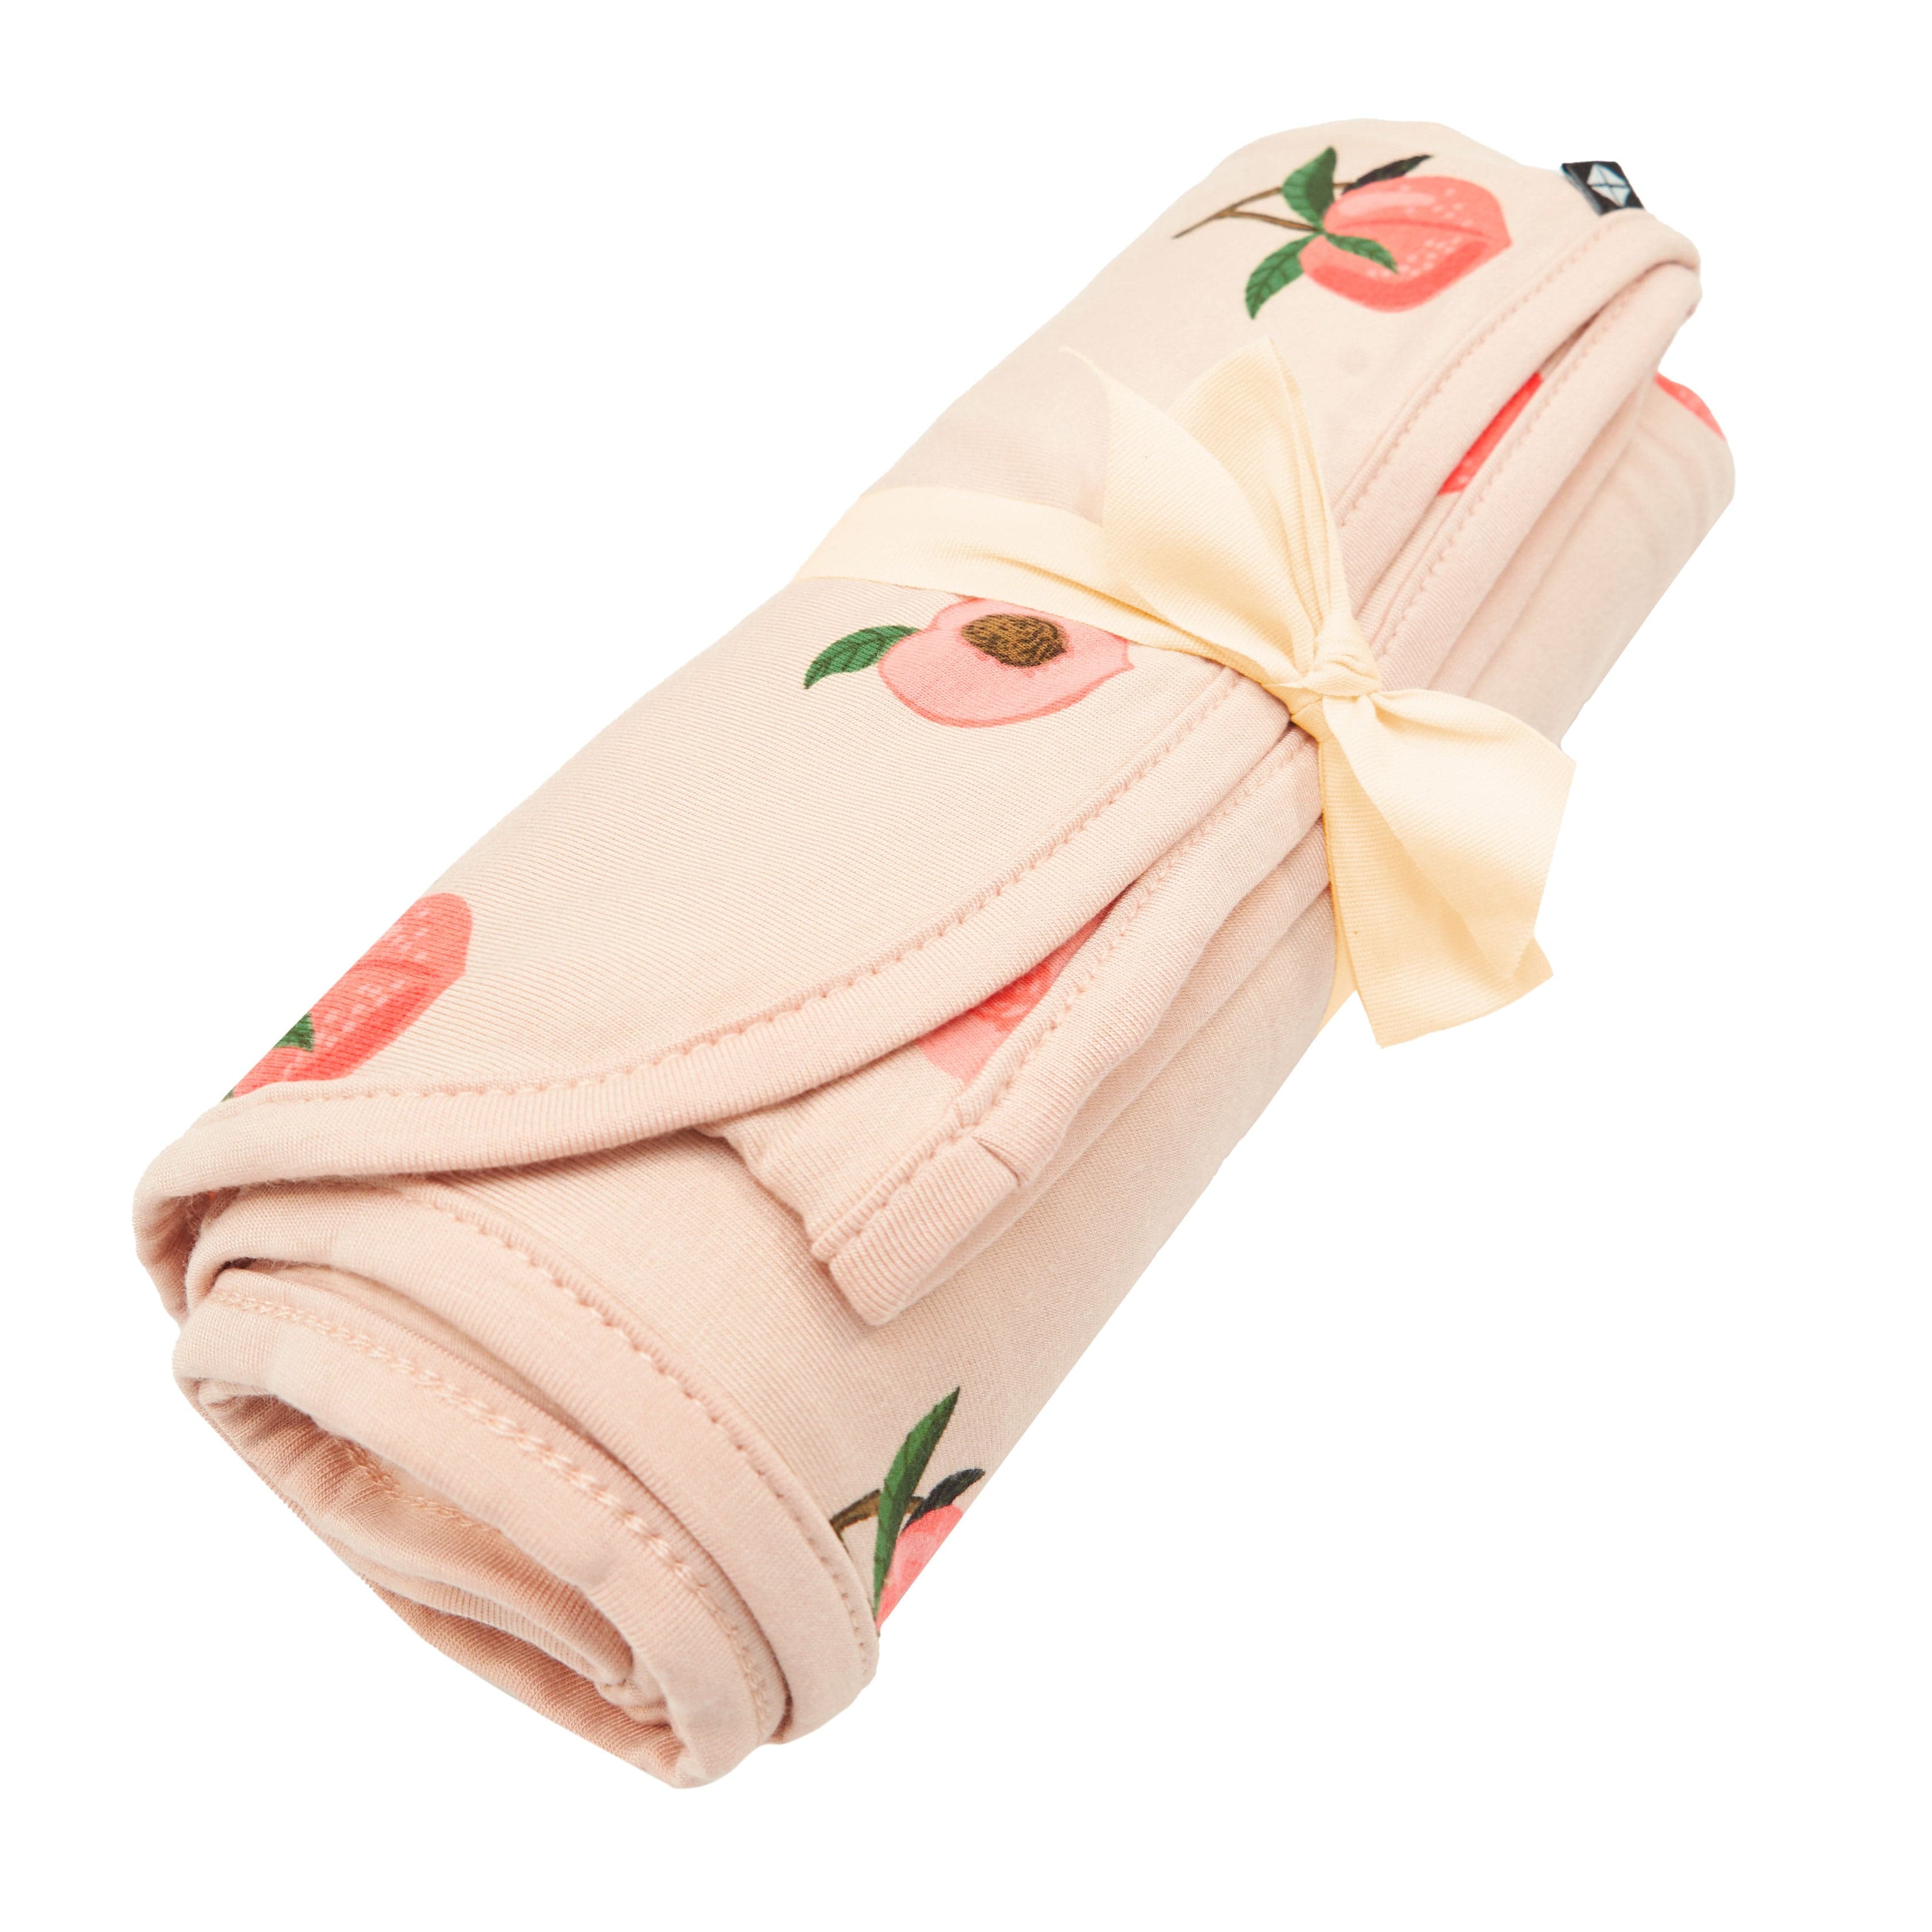 Kyte Baby Swaddling Blanket Peach / Infant Swaddle Blanket in Peach